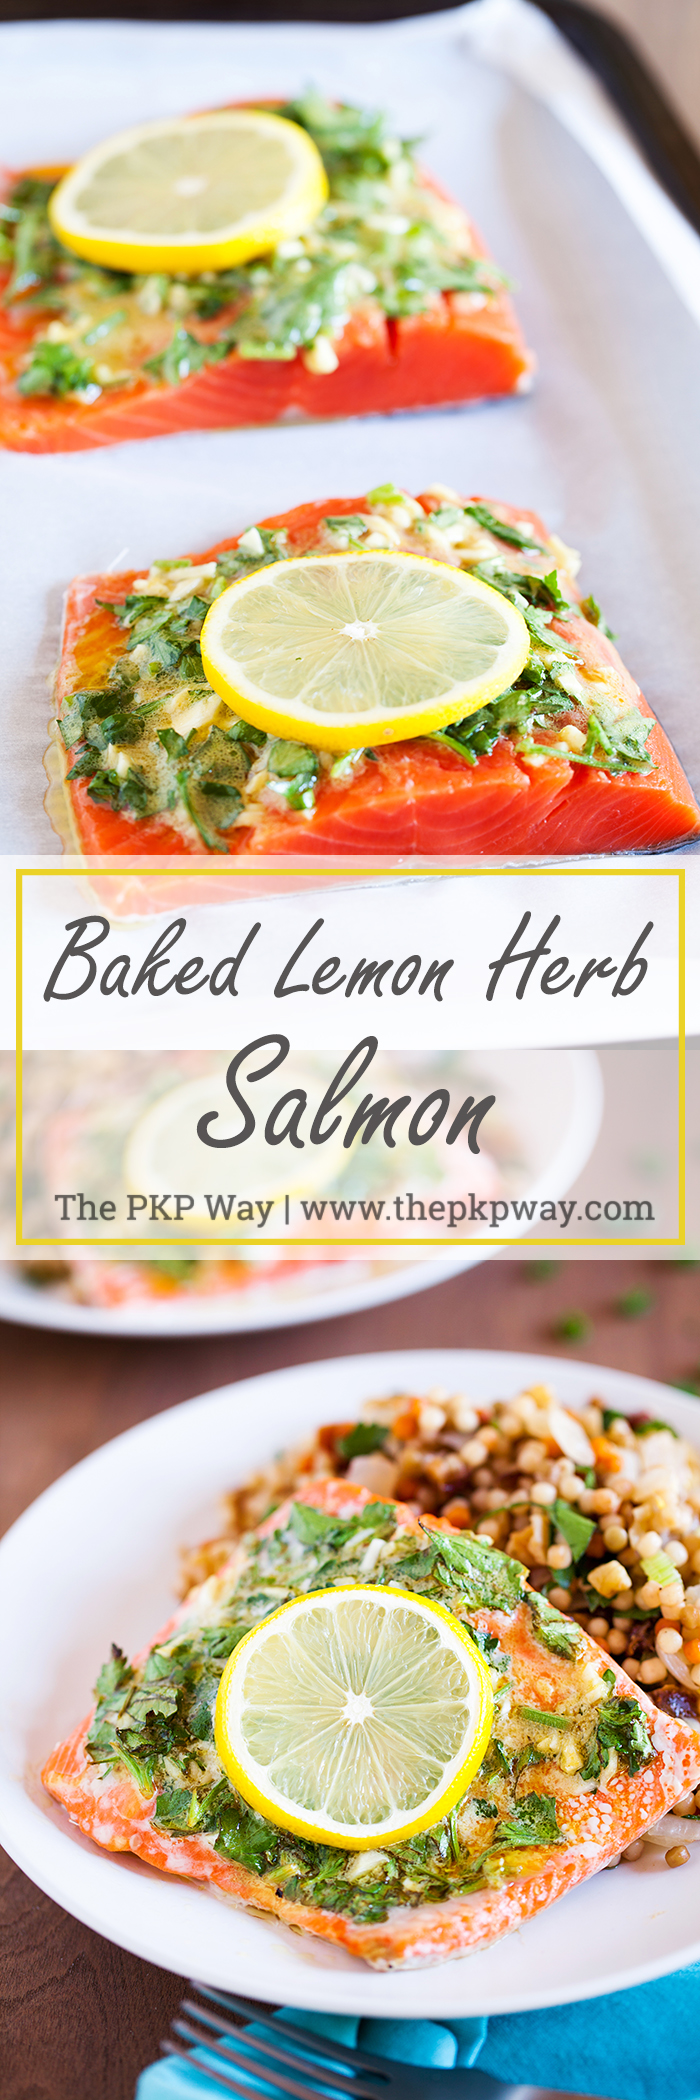 baked-lemon-herb-salmon-16